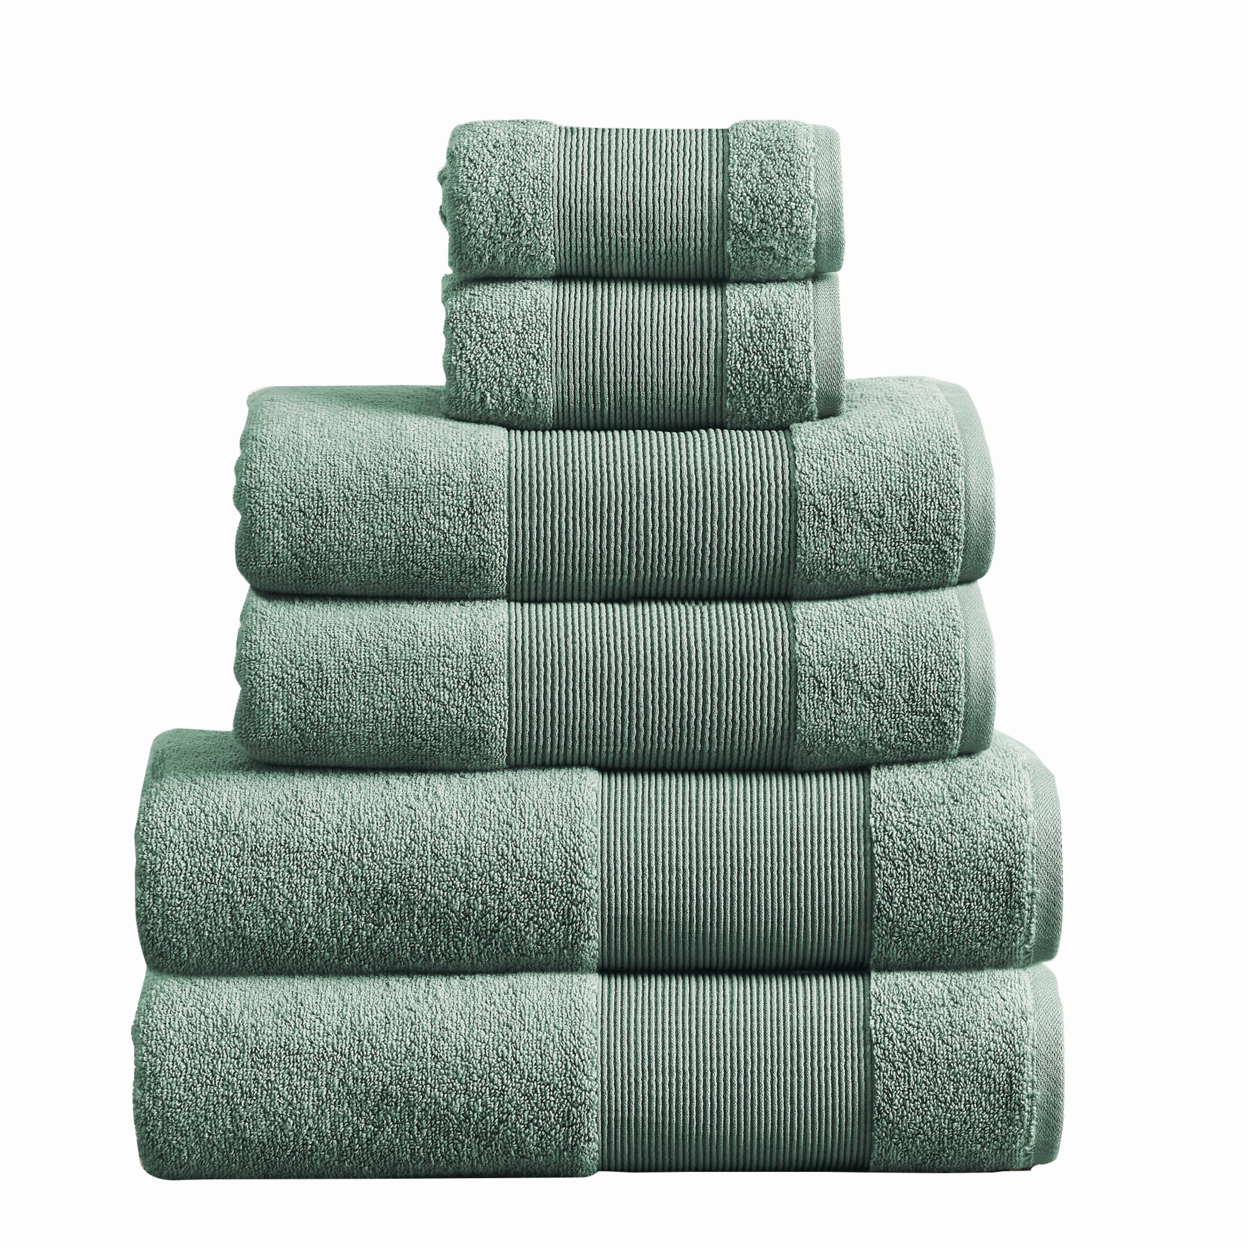 Indy Modern 6 Piece Cotton Towel Set, Softly Textured Design, Turquoise- Saltoro Sherpi